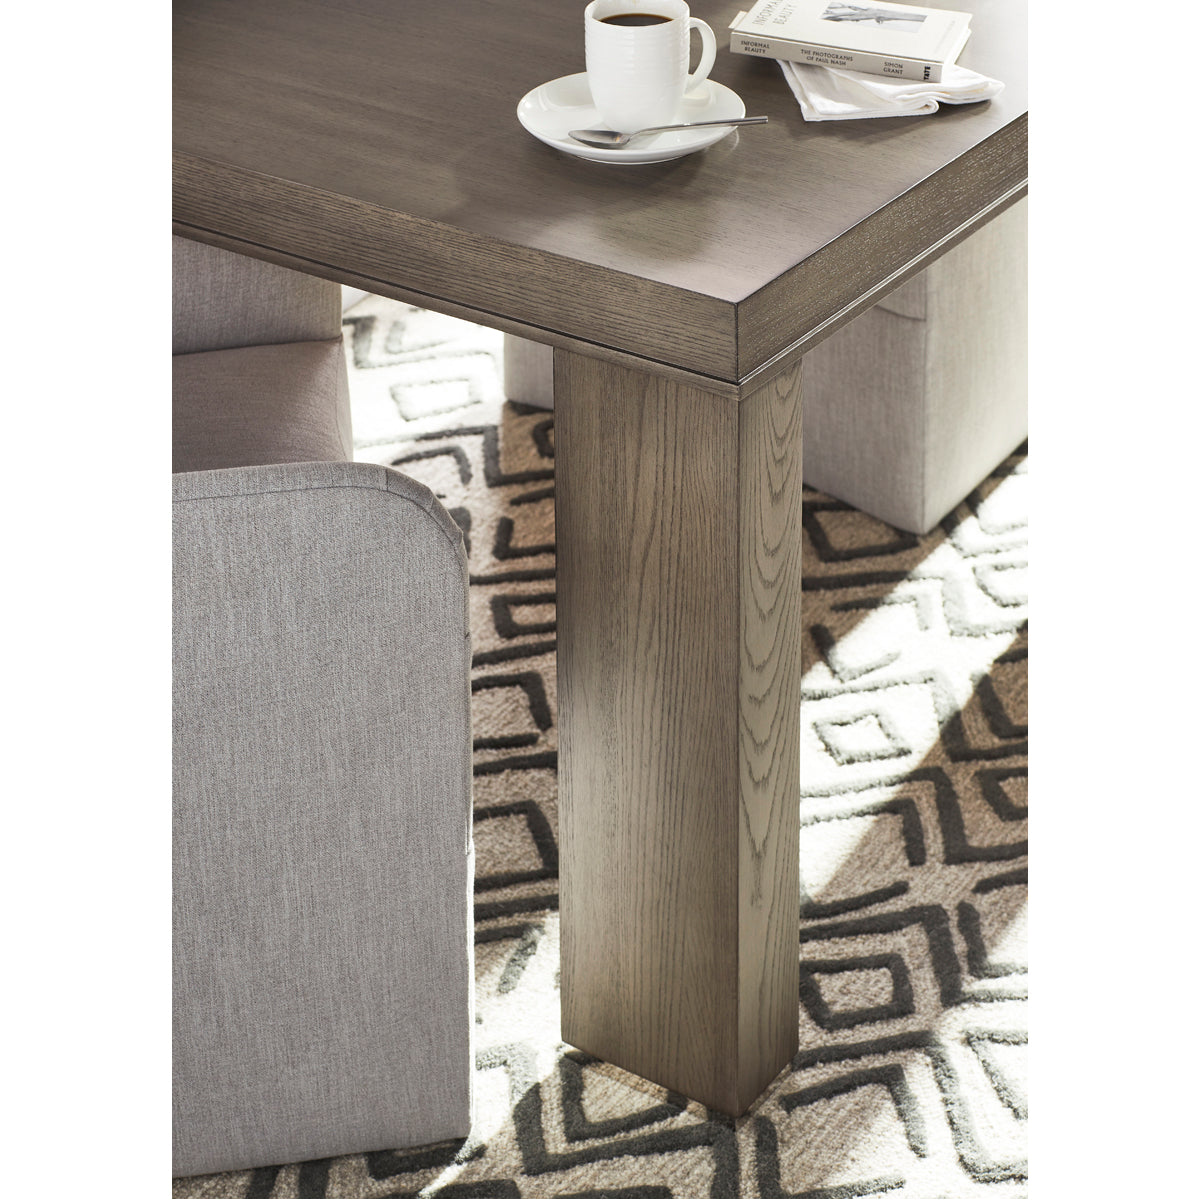 Vanguard Furniture Modern Dining Table with Modern Leg